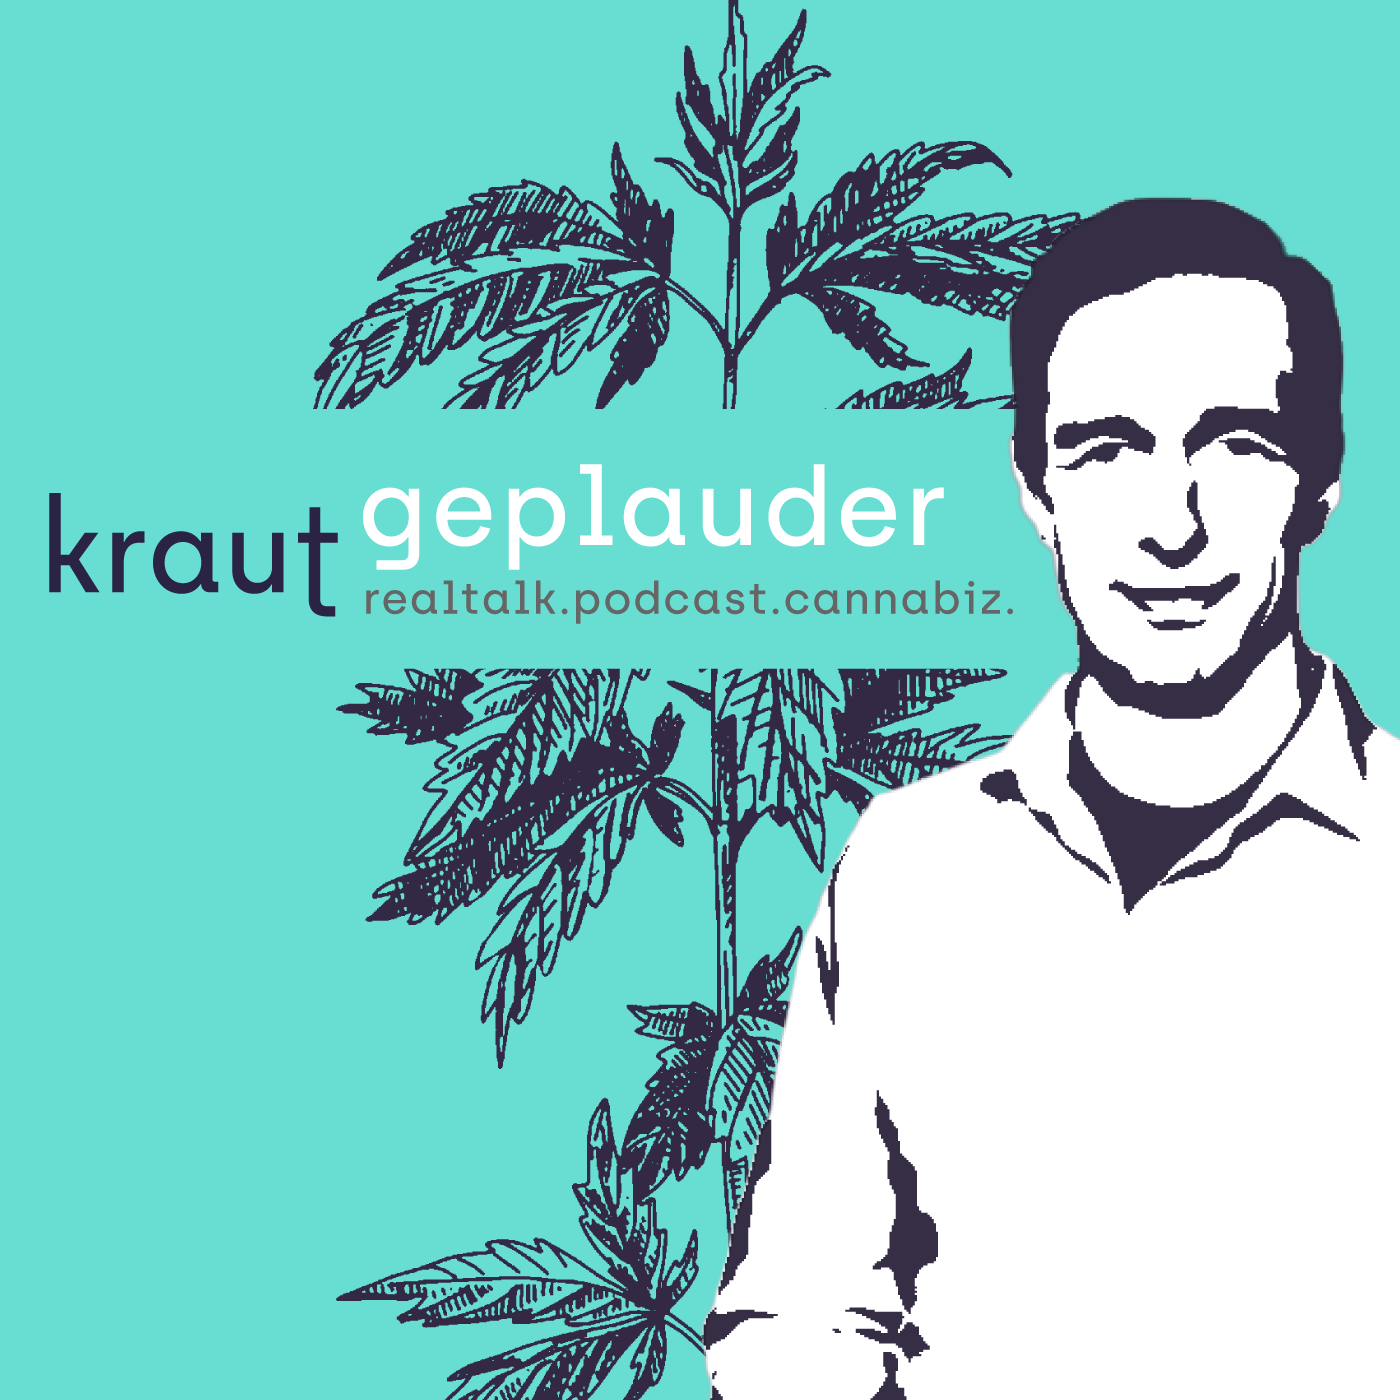 Krautgeplauder | real talk.podcast.cannabiz